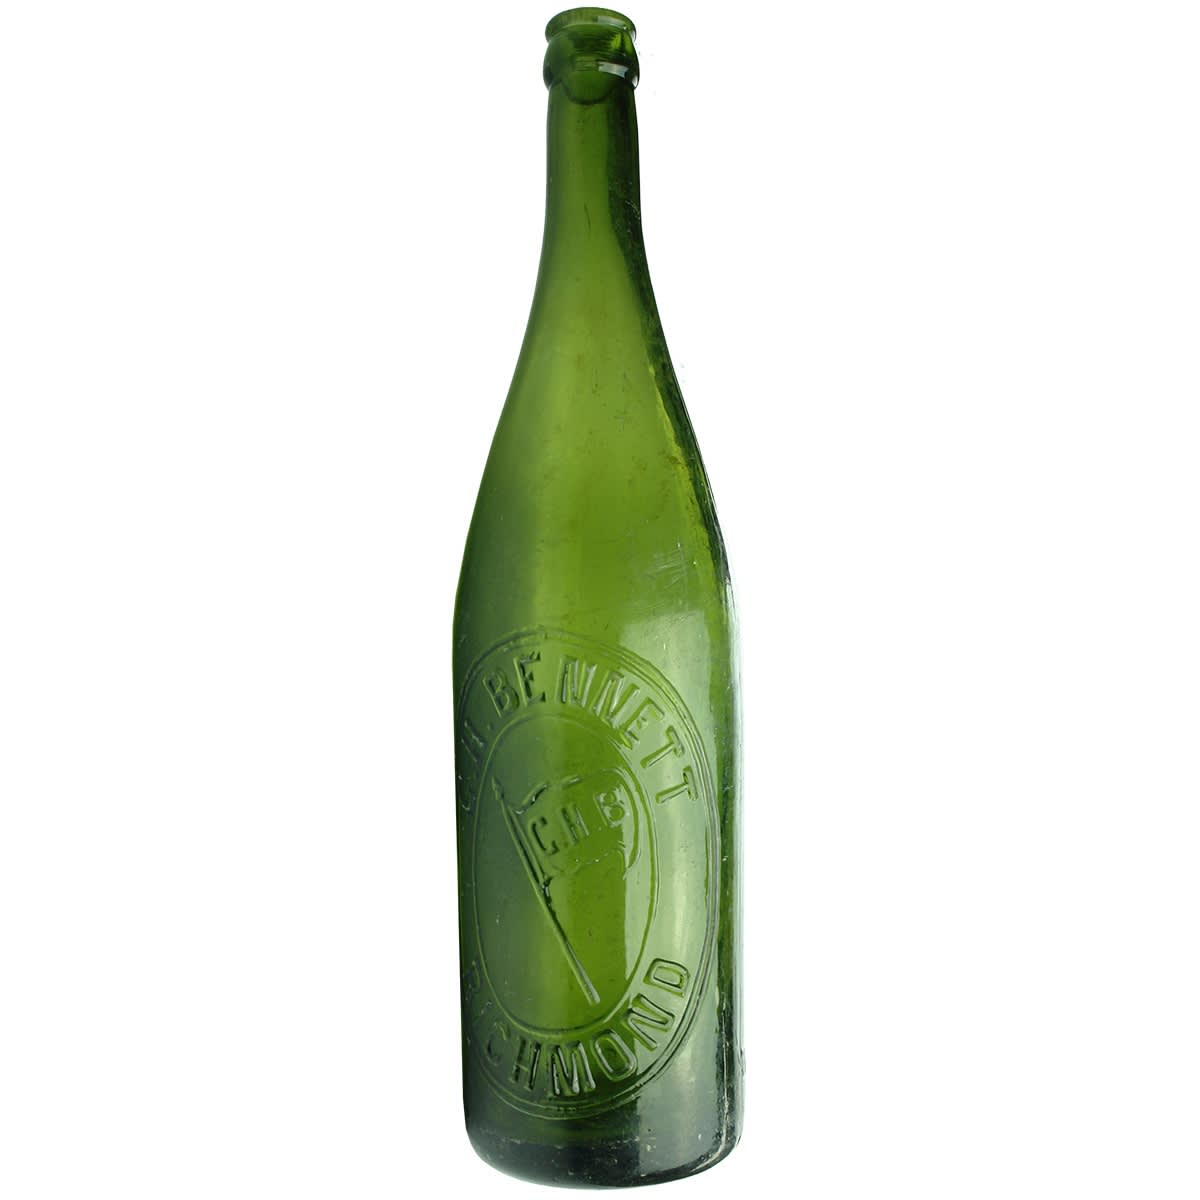 Crown Seal Hop Beer. G. H. Bennett, Richmond. Flag. Green. 26 oz. (Victoria)